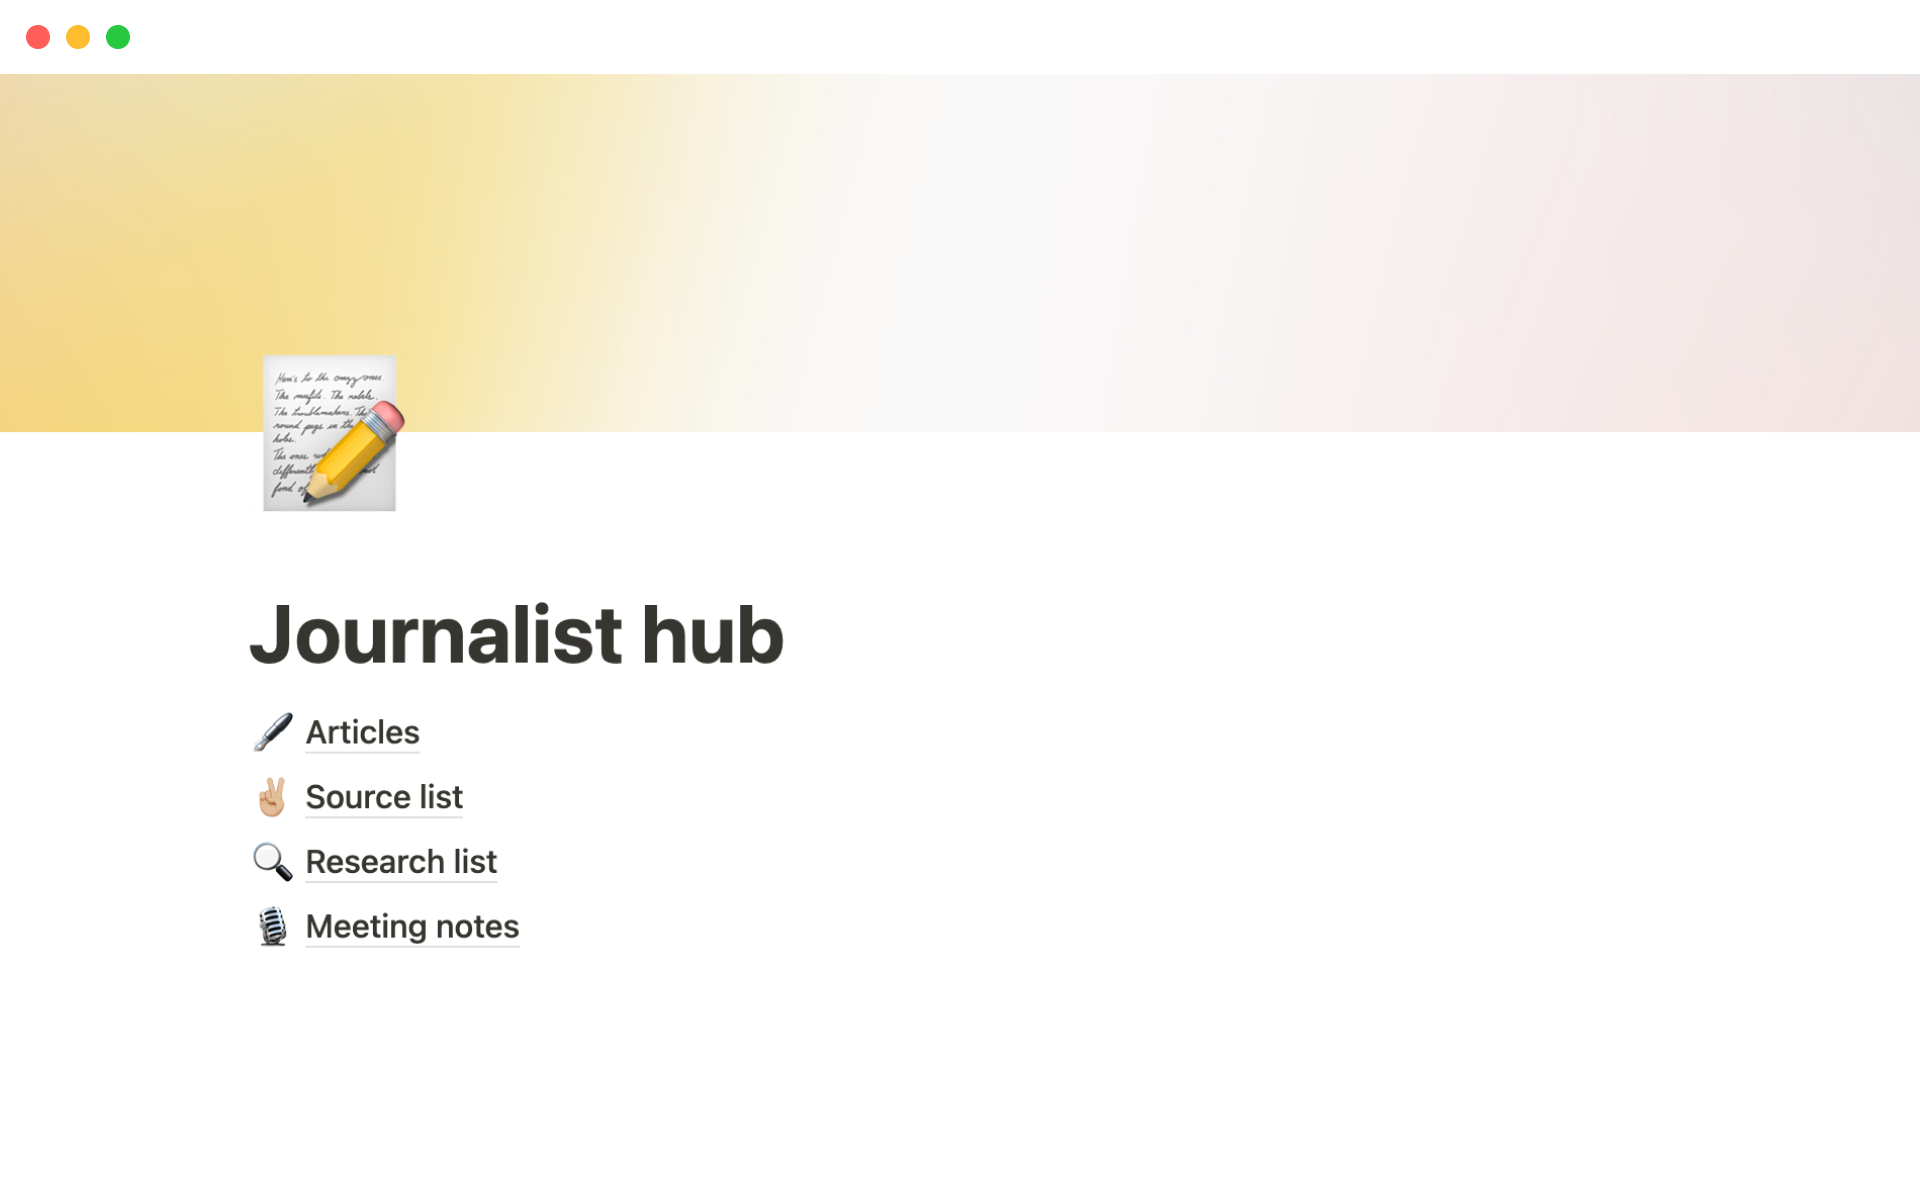 Vista previa de plantilla para Journalist hub